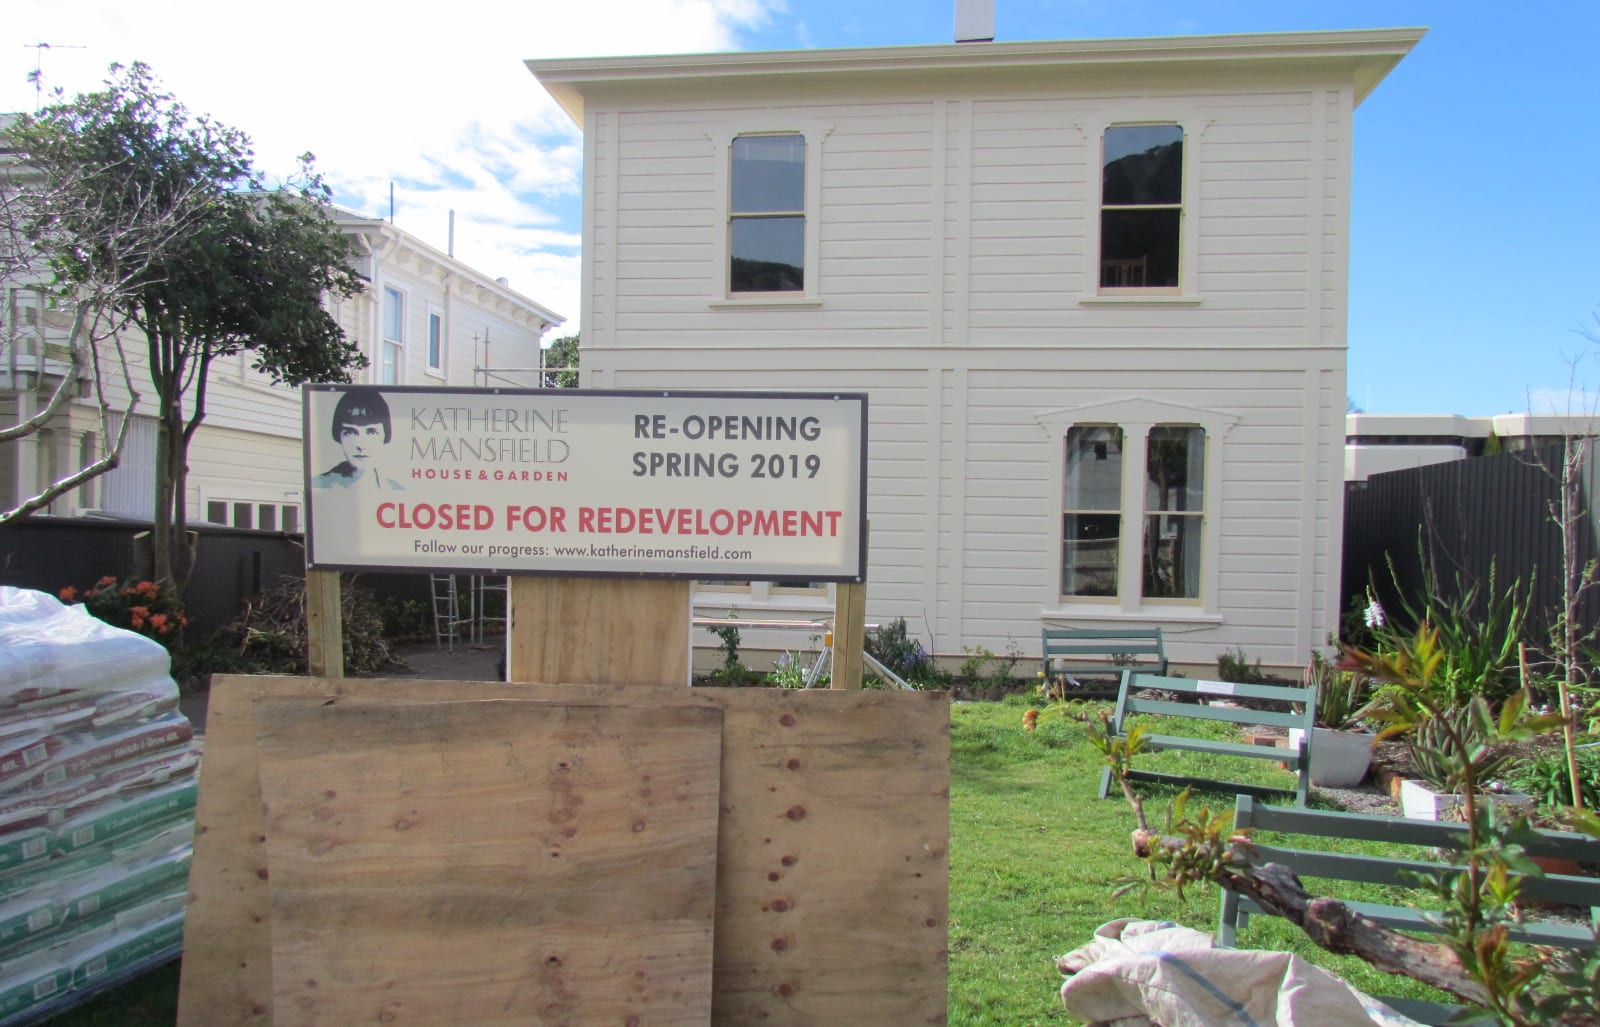 Katherine Mansfield's childhood home has been undergoing redevelopment.